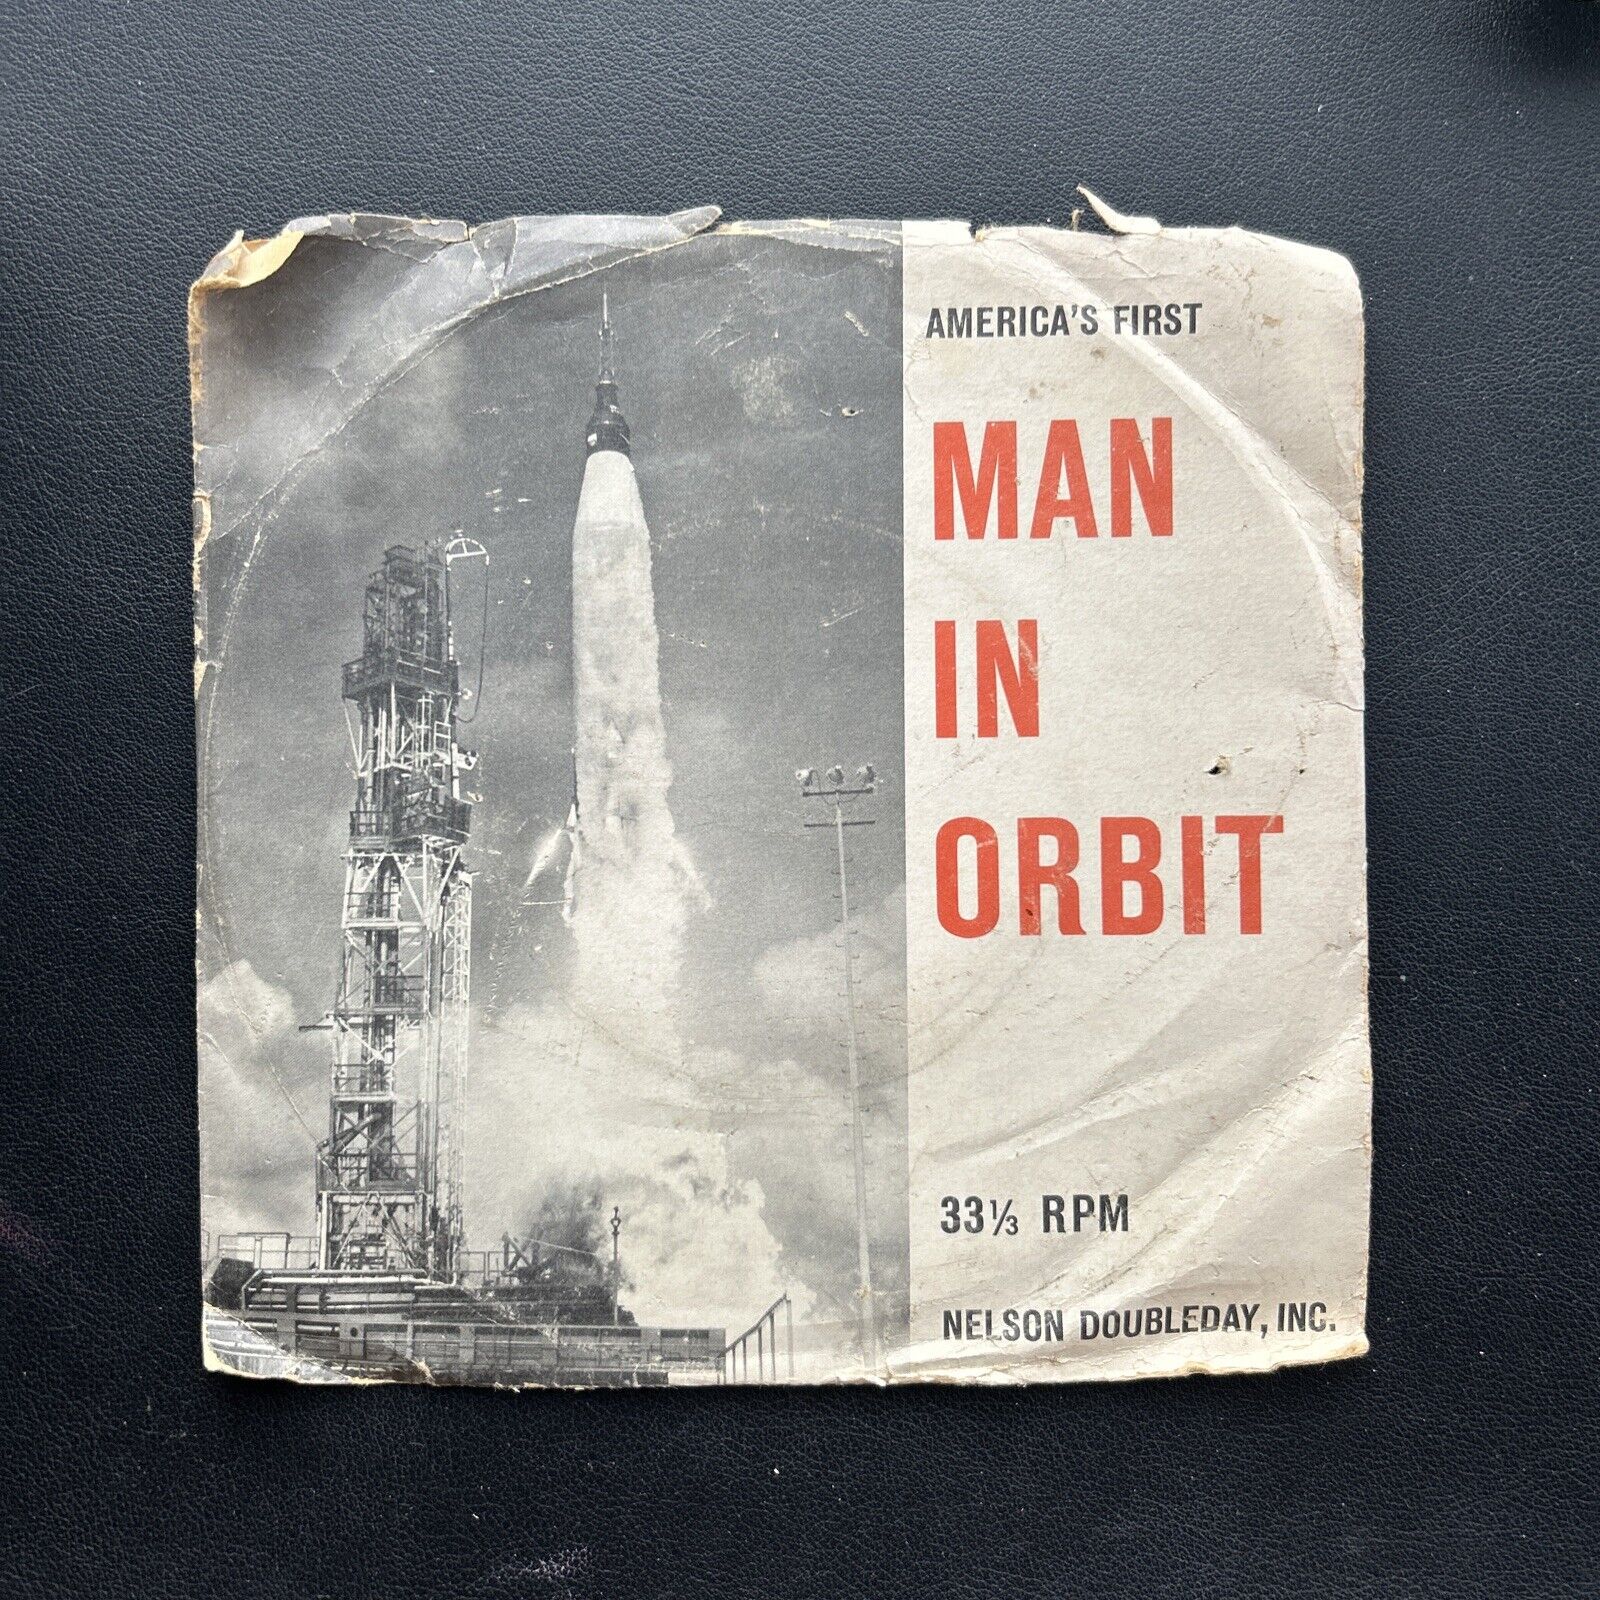 1962 MAN IN ORBIT, JOHN GLENN 331/3 RPM RECORD RECORDING.